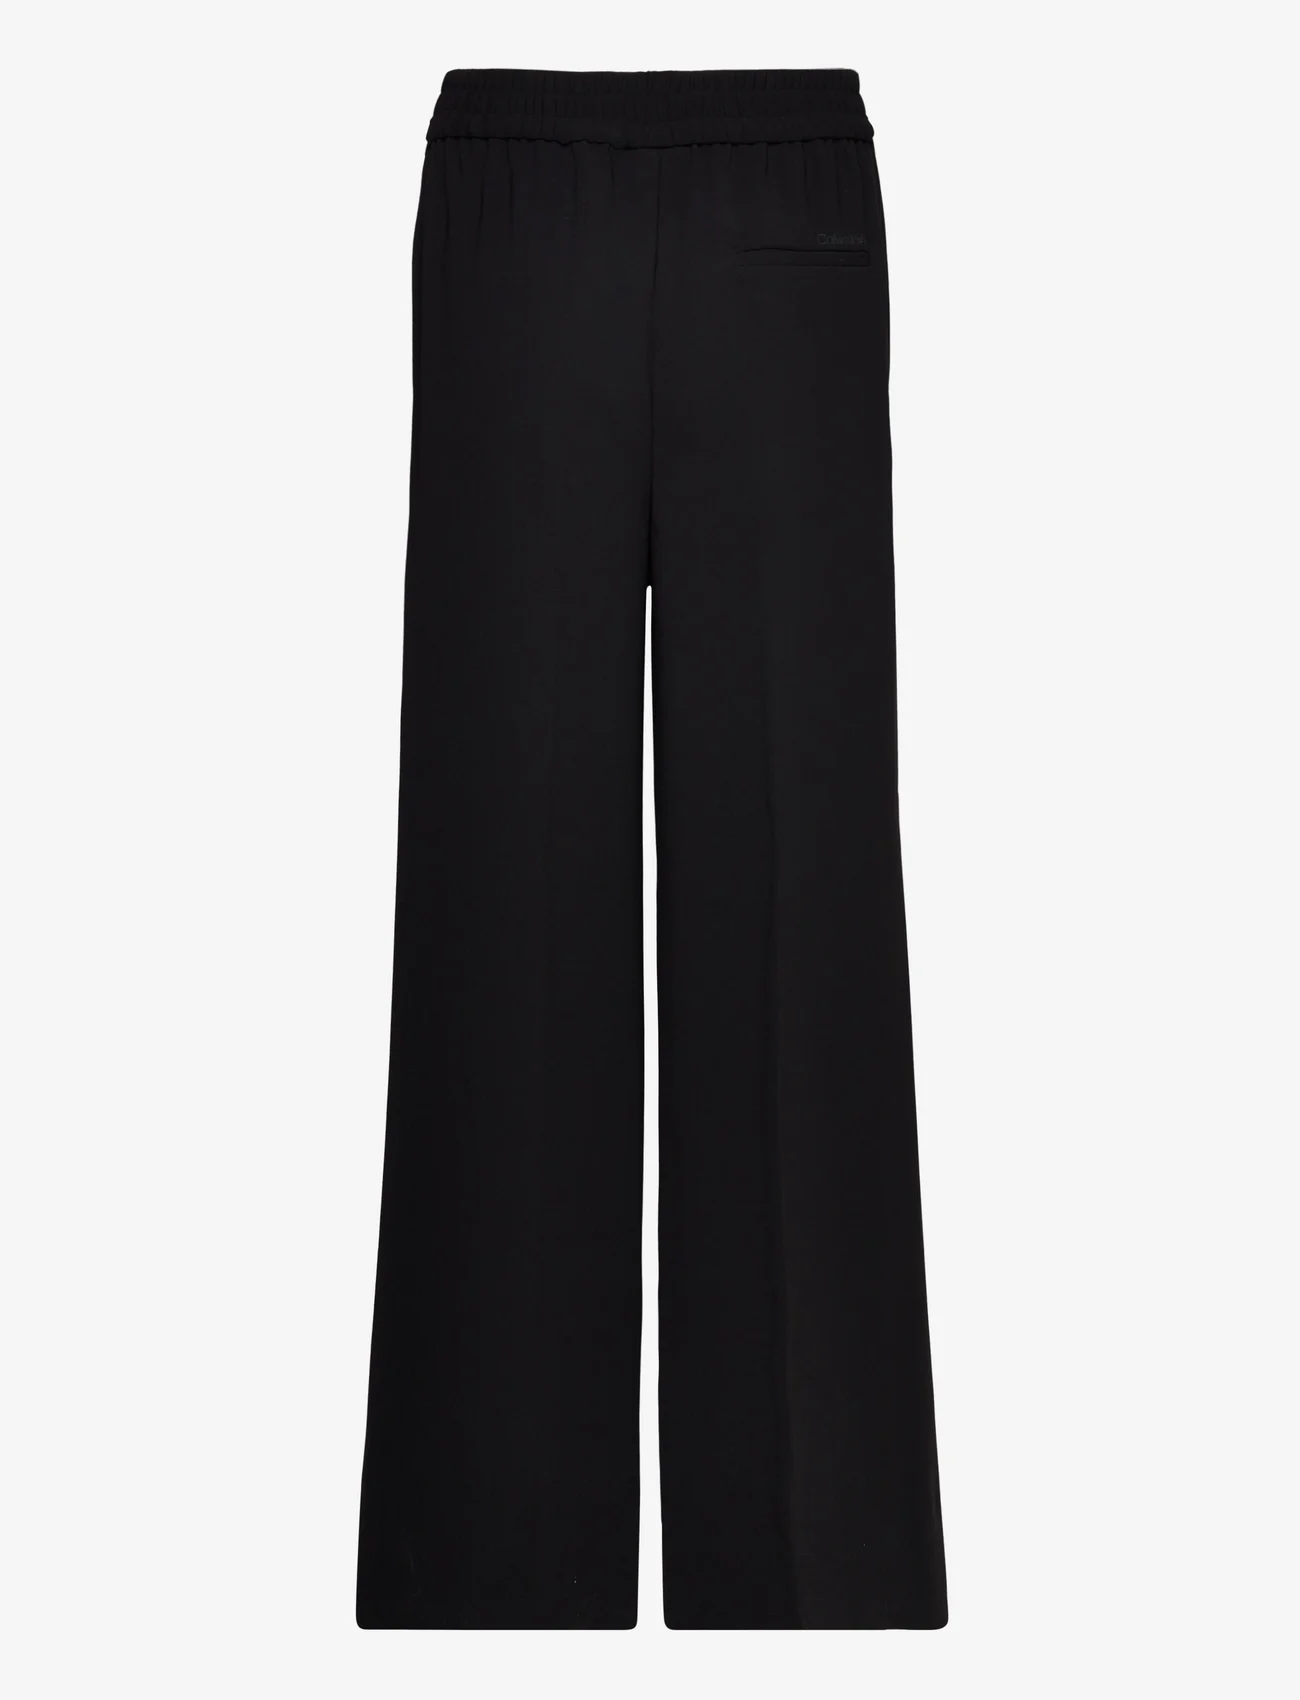 Calvin Klein - STRUCTURE TWILL ELASTIC PANT - spodnie szerokie - ck black - 1